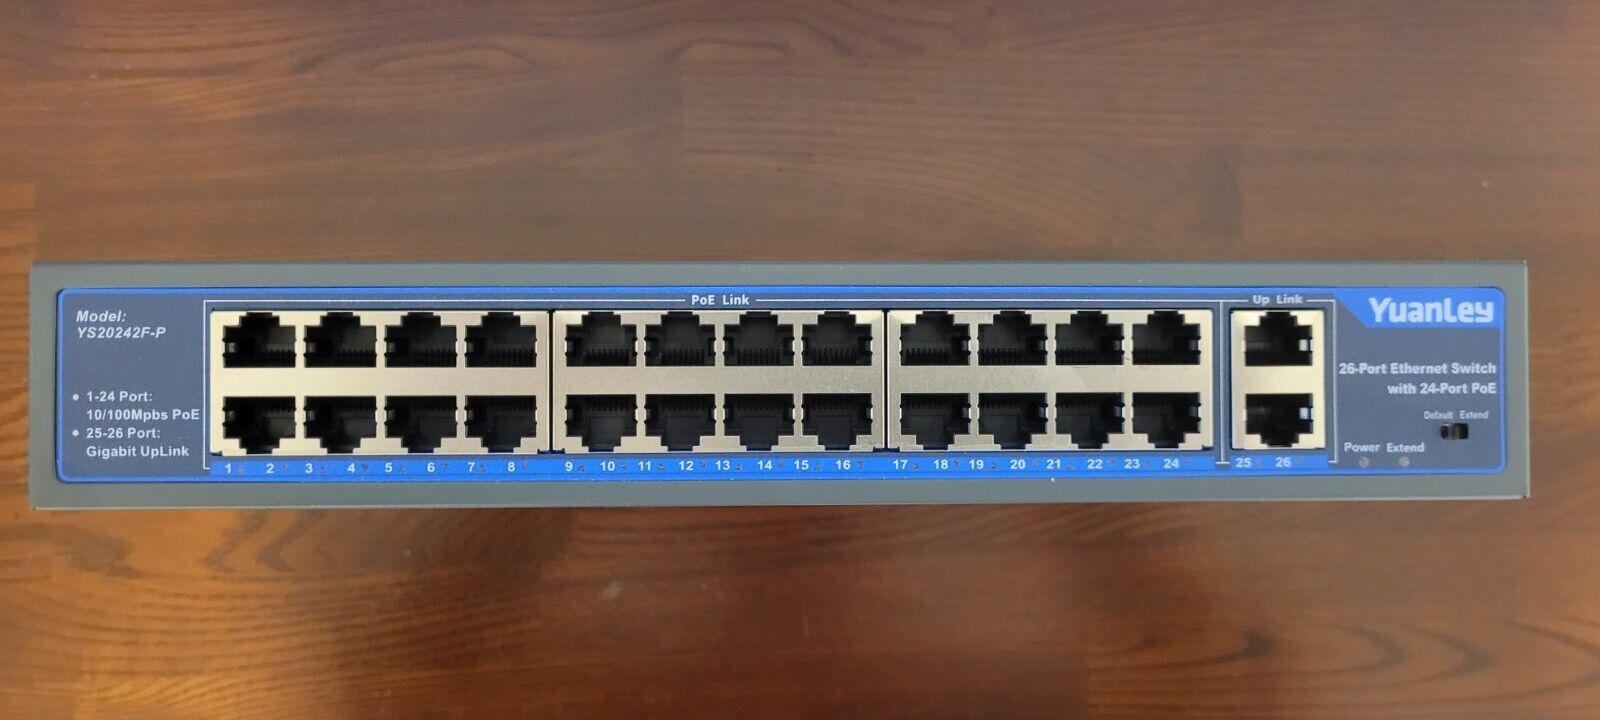 YuanLey 26 Port Ethernet Switch,with 24 port 10/100Mpbs poe,2 Gigabit Uplink